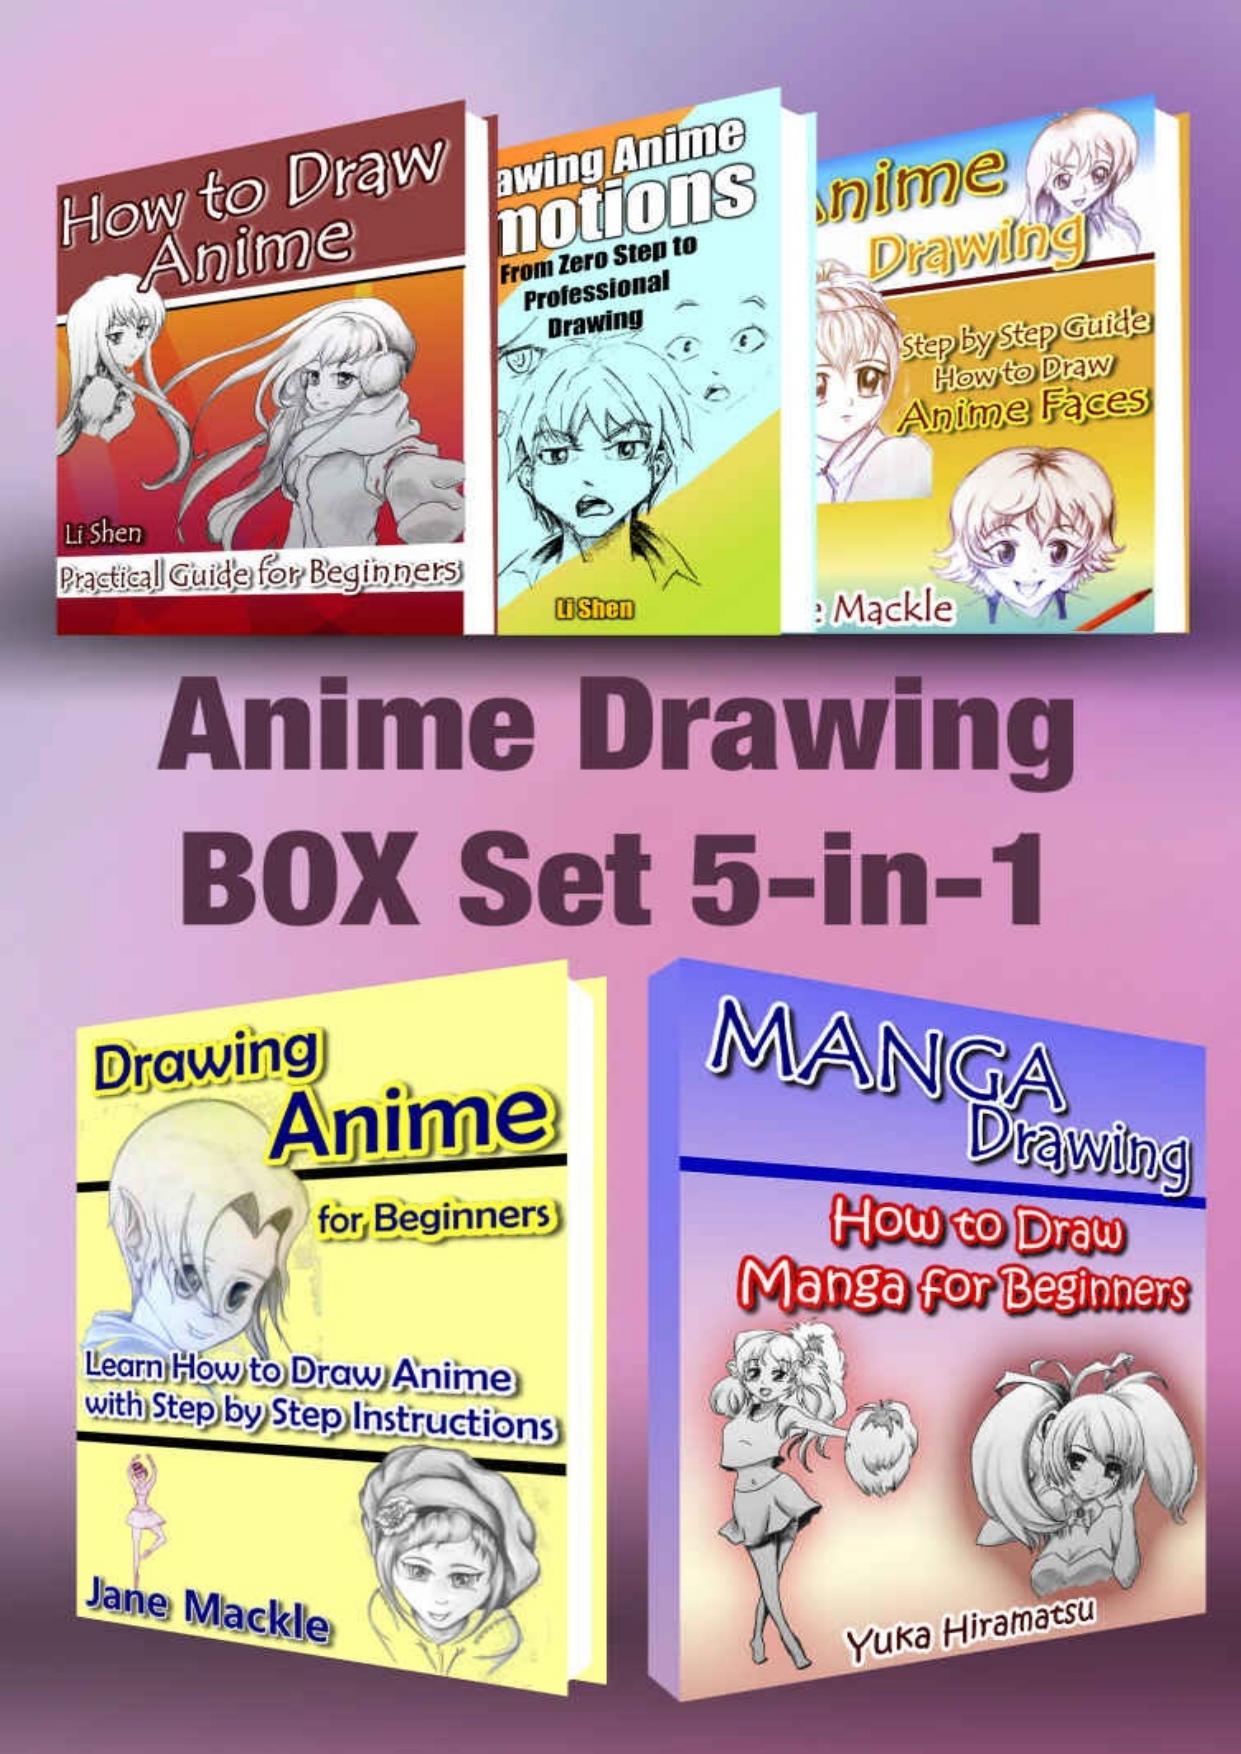 ANIME Drawing BOX set 5-in-1: Anime Drawing for Beginners, Drawing Anime Faces, Drawing Anime Emotions, Manga Drawing for Beginners, Anime Drawing Practical Guide by Li Shen & Jane Mackle & Yuka Hiramatsu